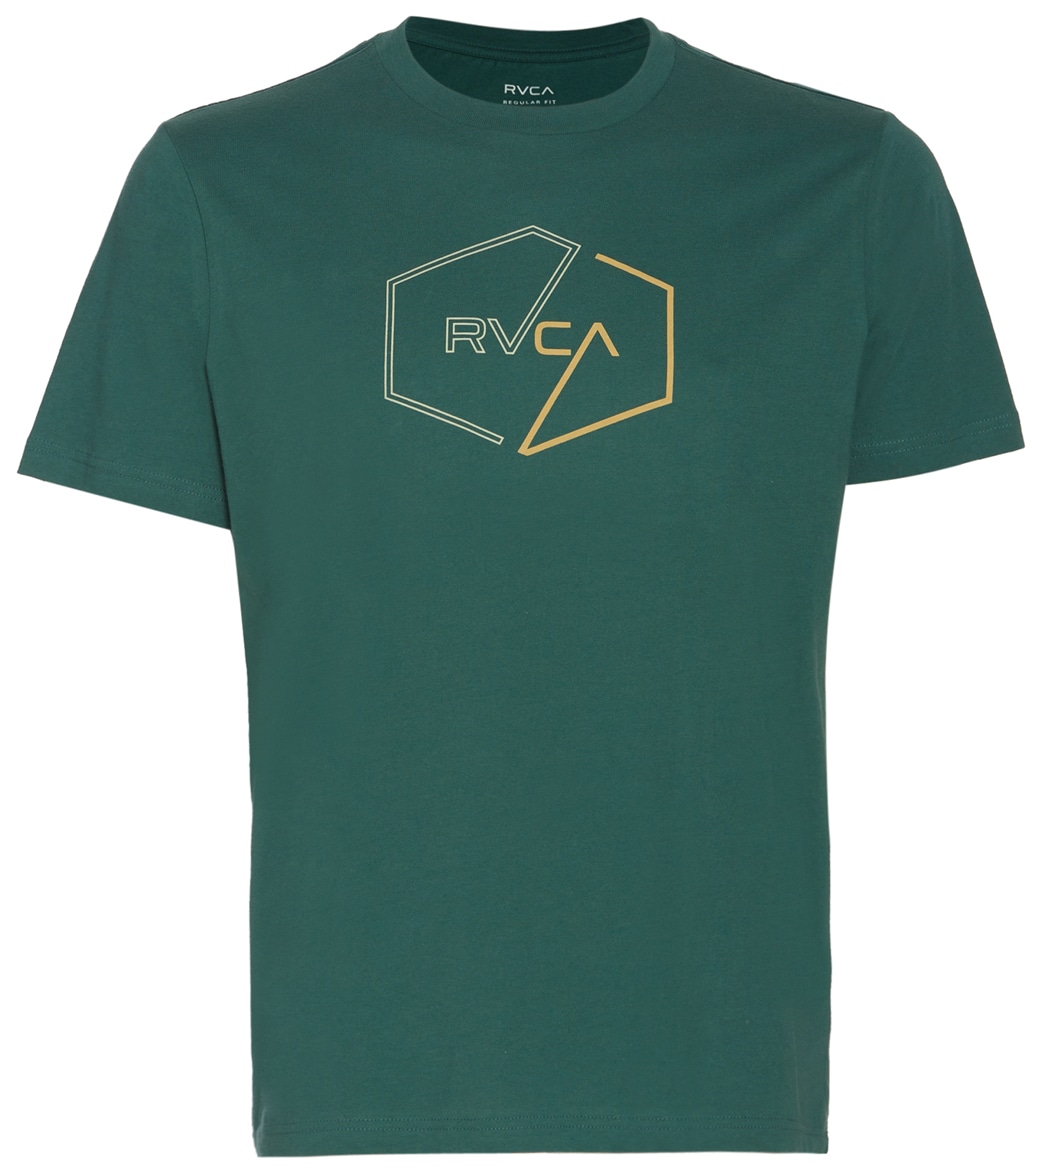 Rvca Men's Halfway Short Sleeve Tee Shirt - Hunter Green Large Cotton - Swimoutlet.com